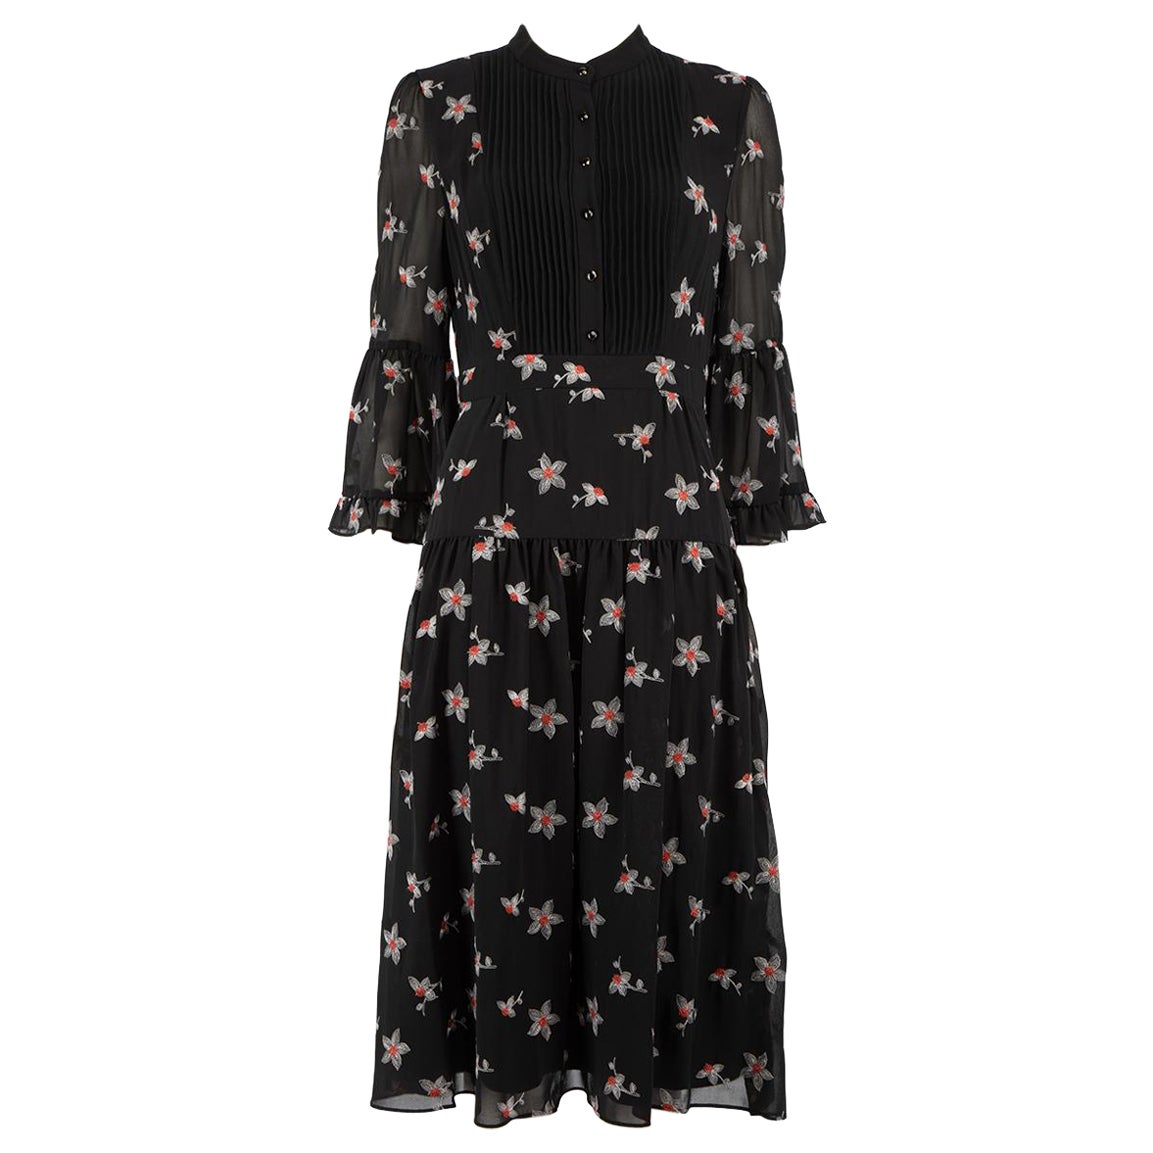 Temperley London Black Floral Embroidered Dress Size L For Sale